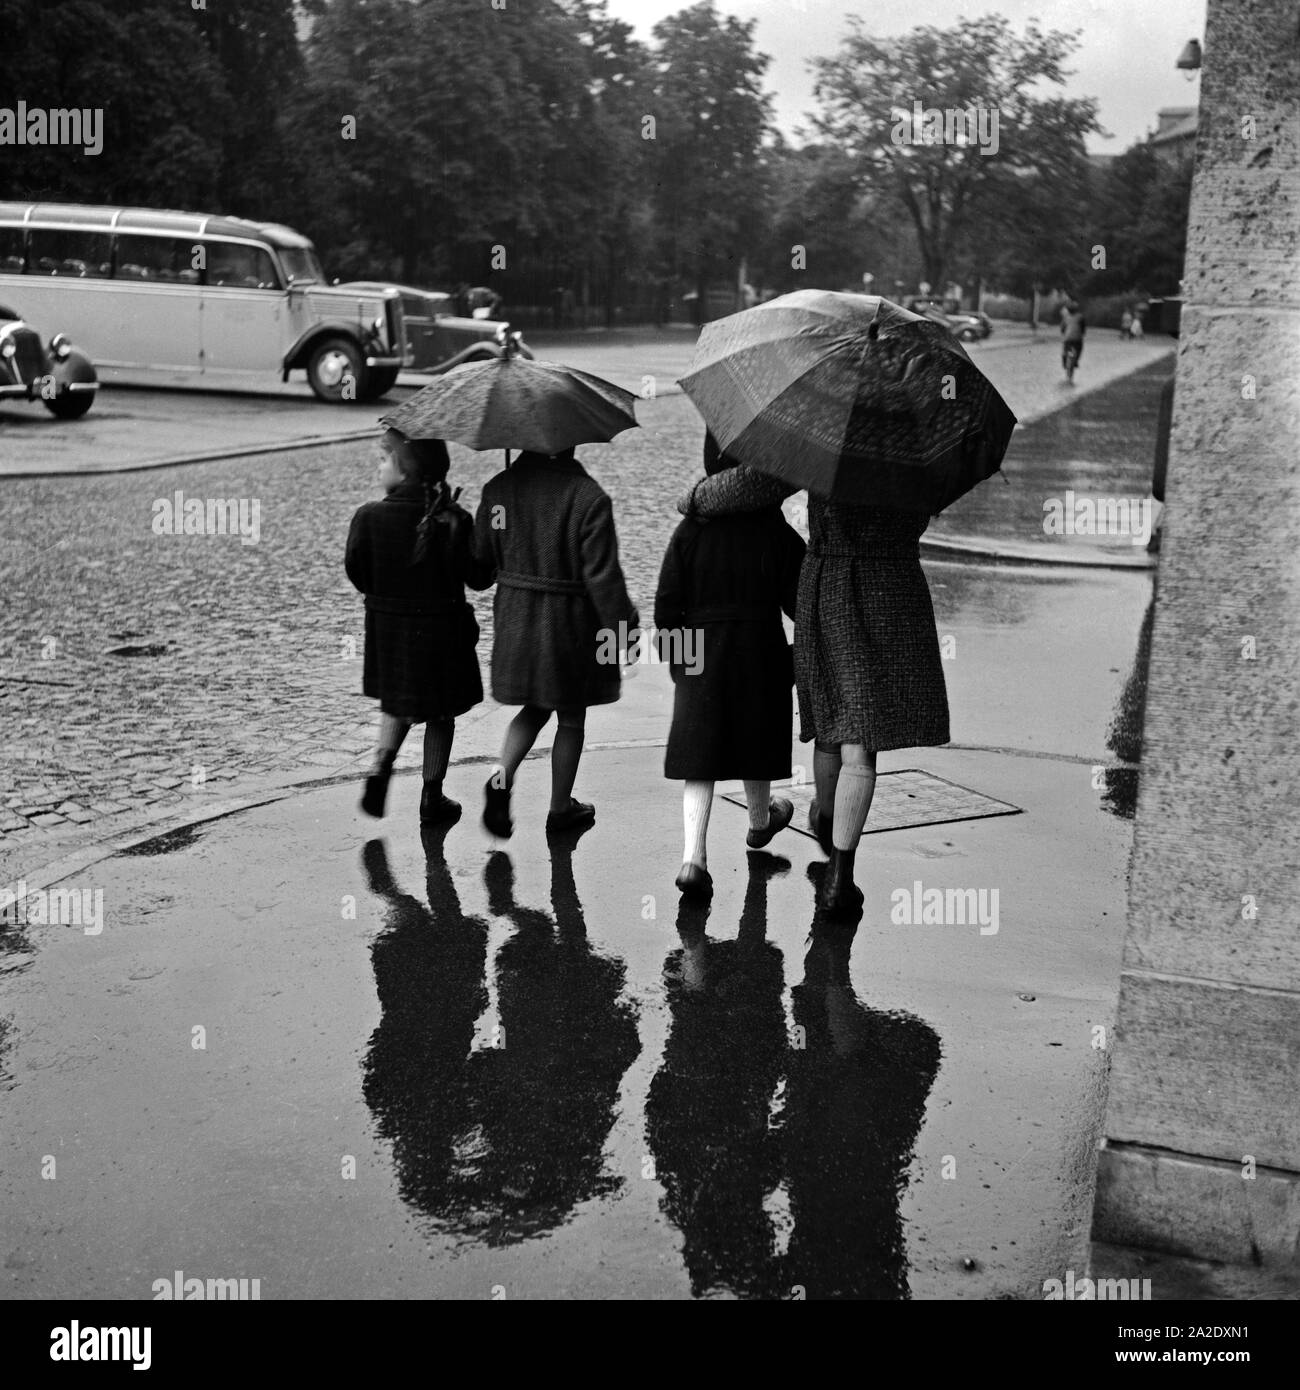 Vier Kinder im Regen unter dem Regenschirm, Deutschland 1930er Jahre. Vier Kinder im Regen unter ihren Schirmen, Deutschland 1930. Stockfoto